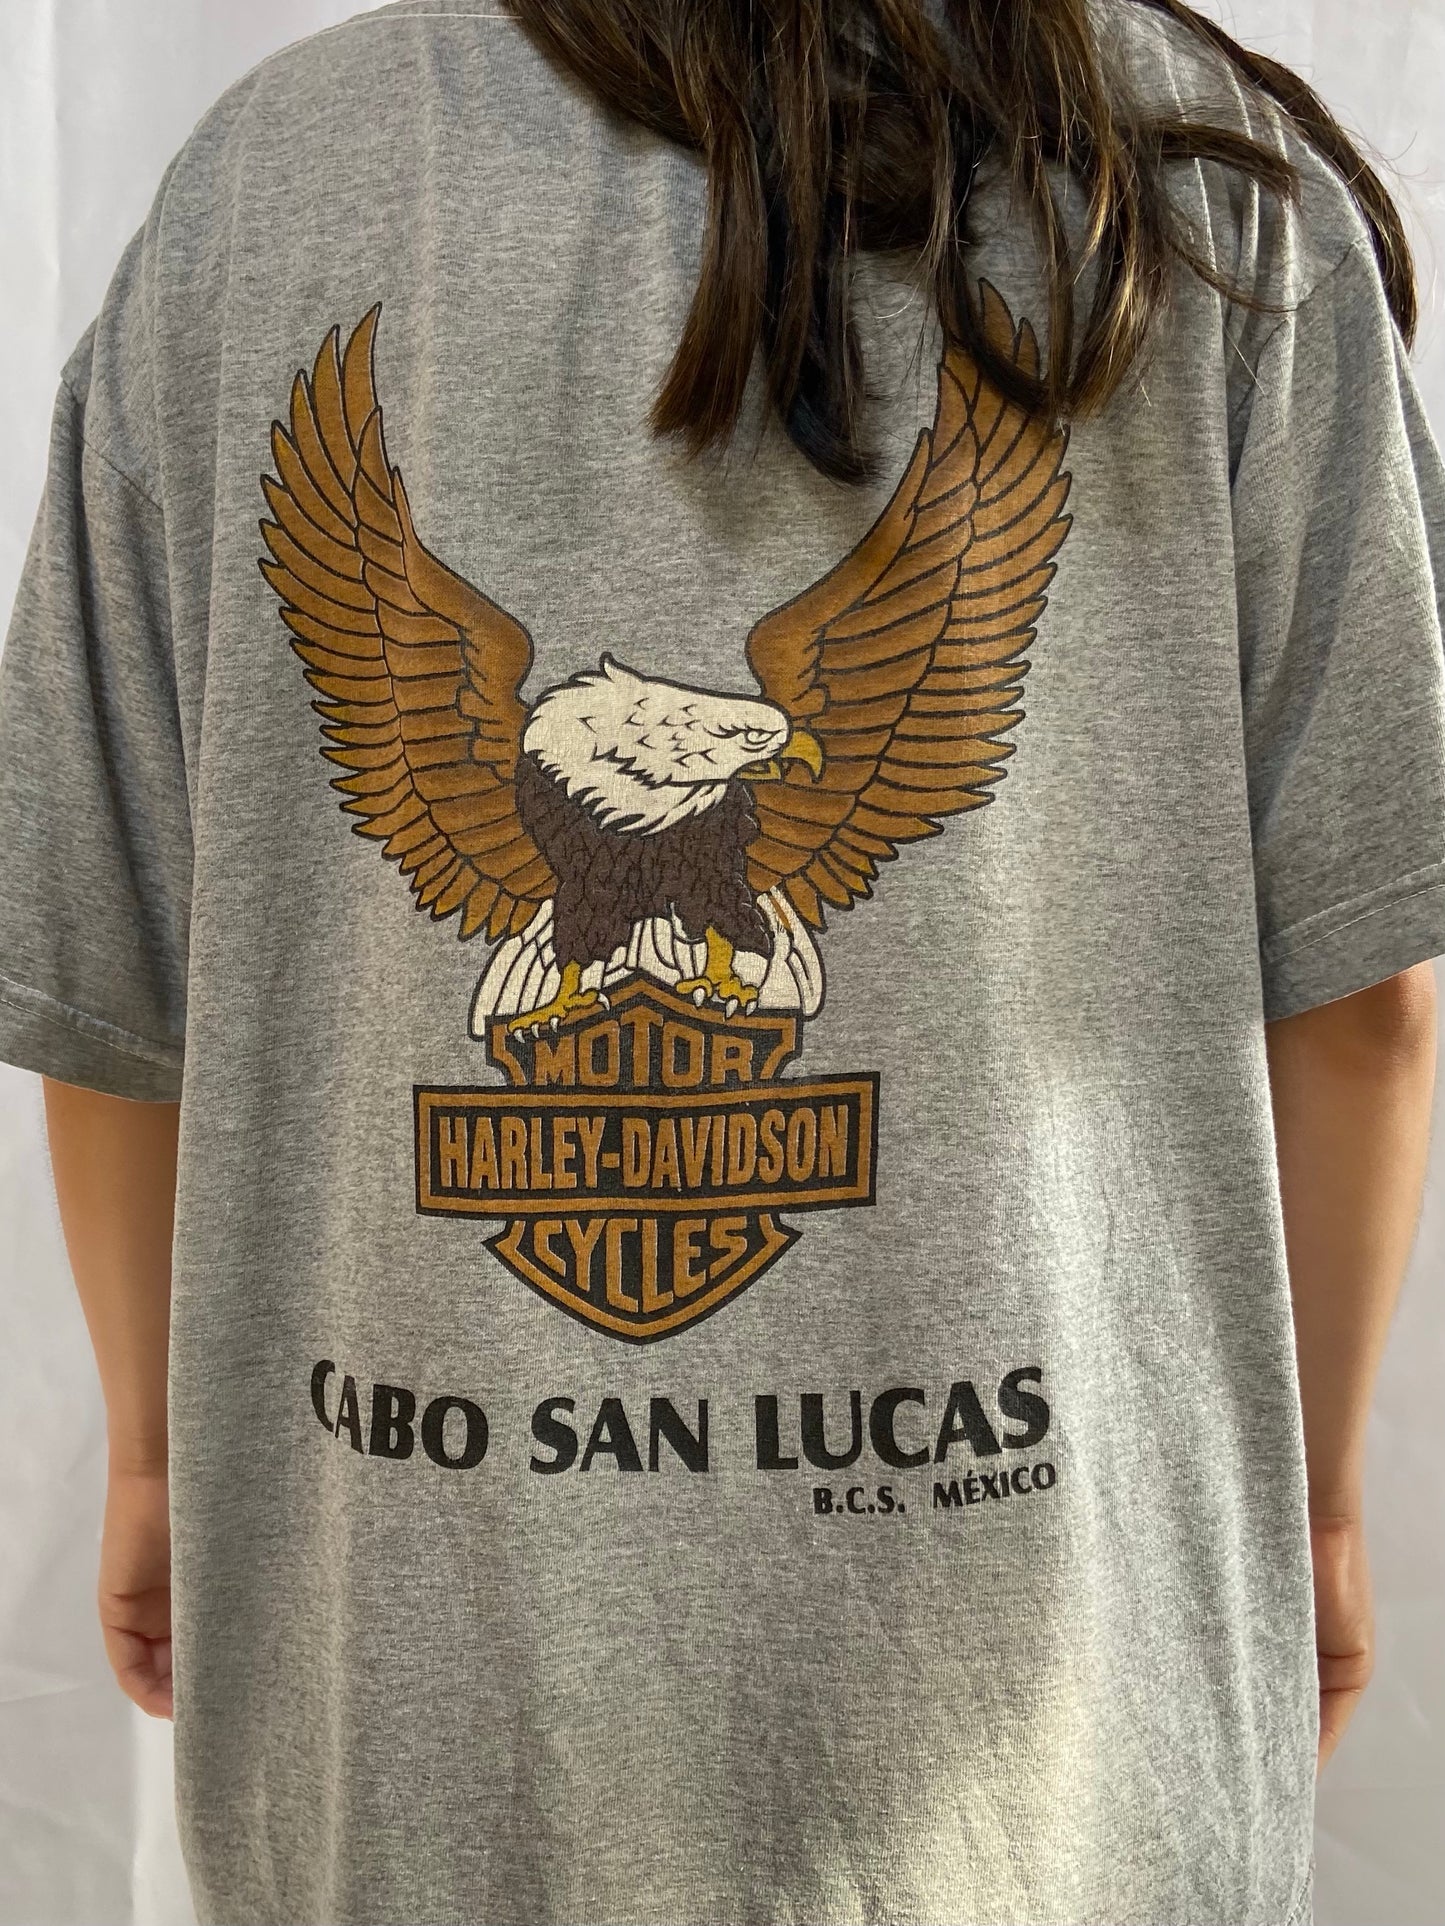 Grey Cabo San Lucas Harley Davidson Tee